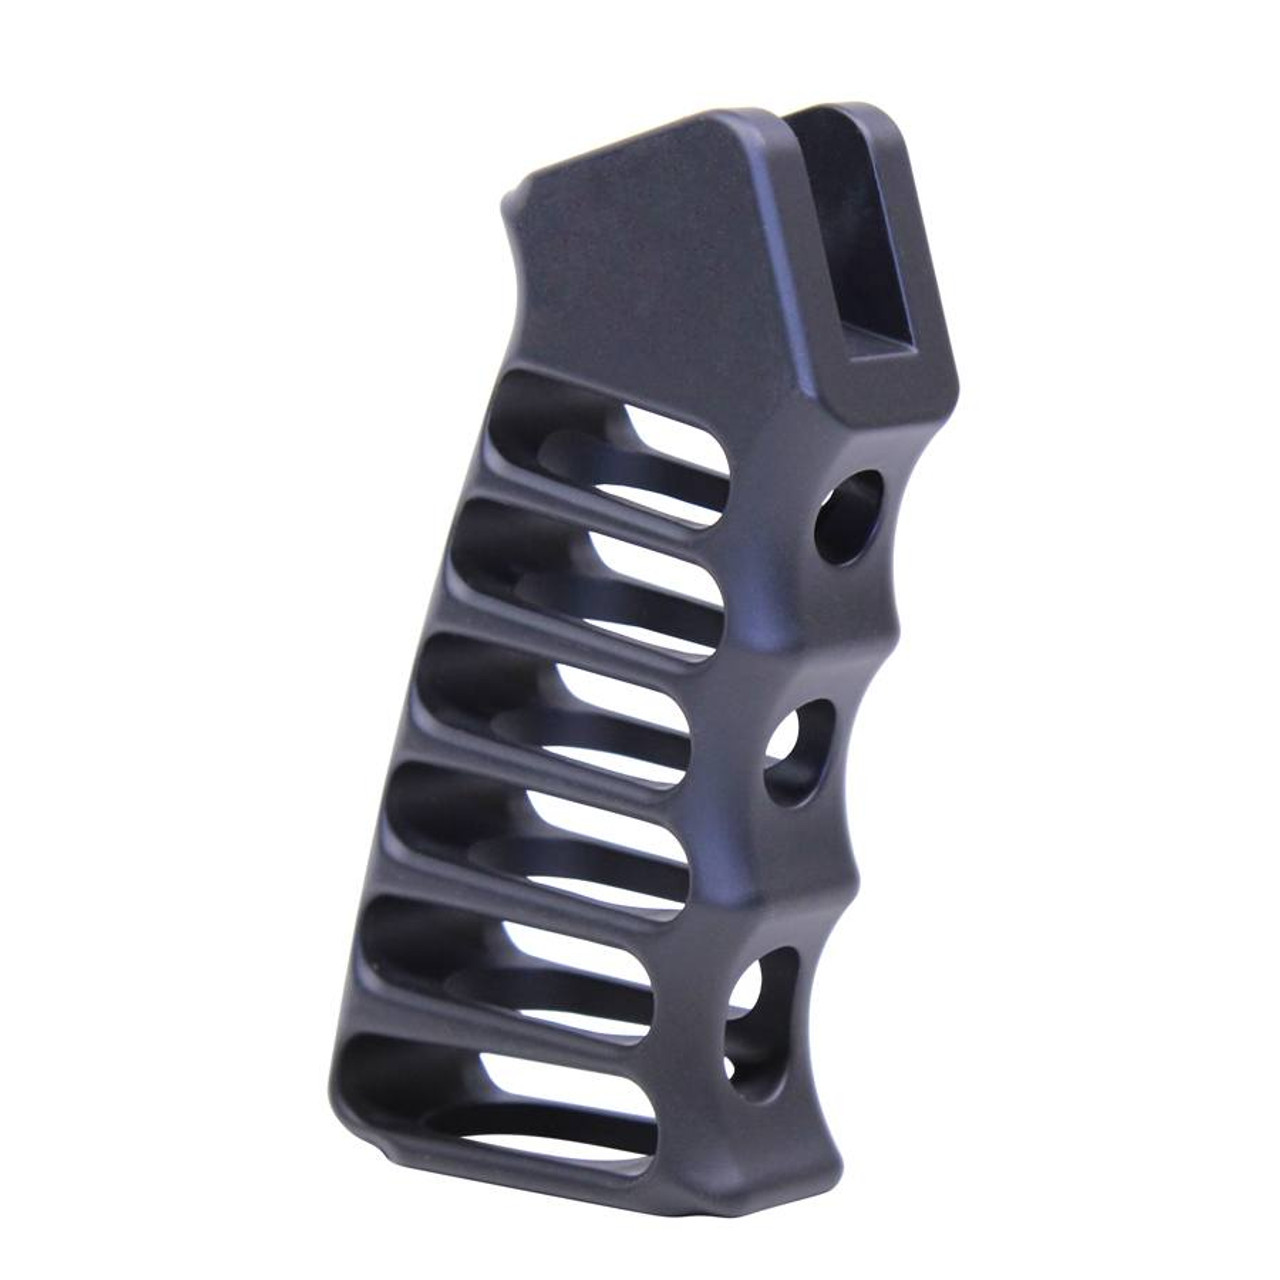 Guntec USA ULS-PG-RC Ultralight Series Skeletonized Aluminum Pistol Grip (Rubberized Coating)